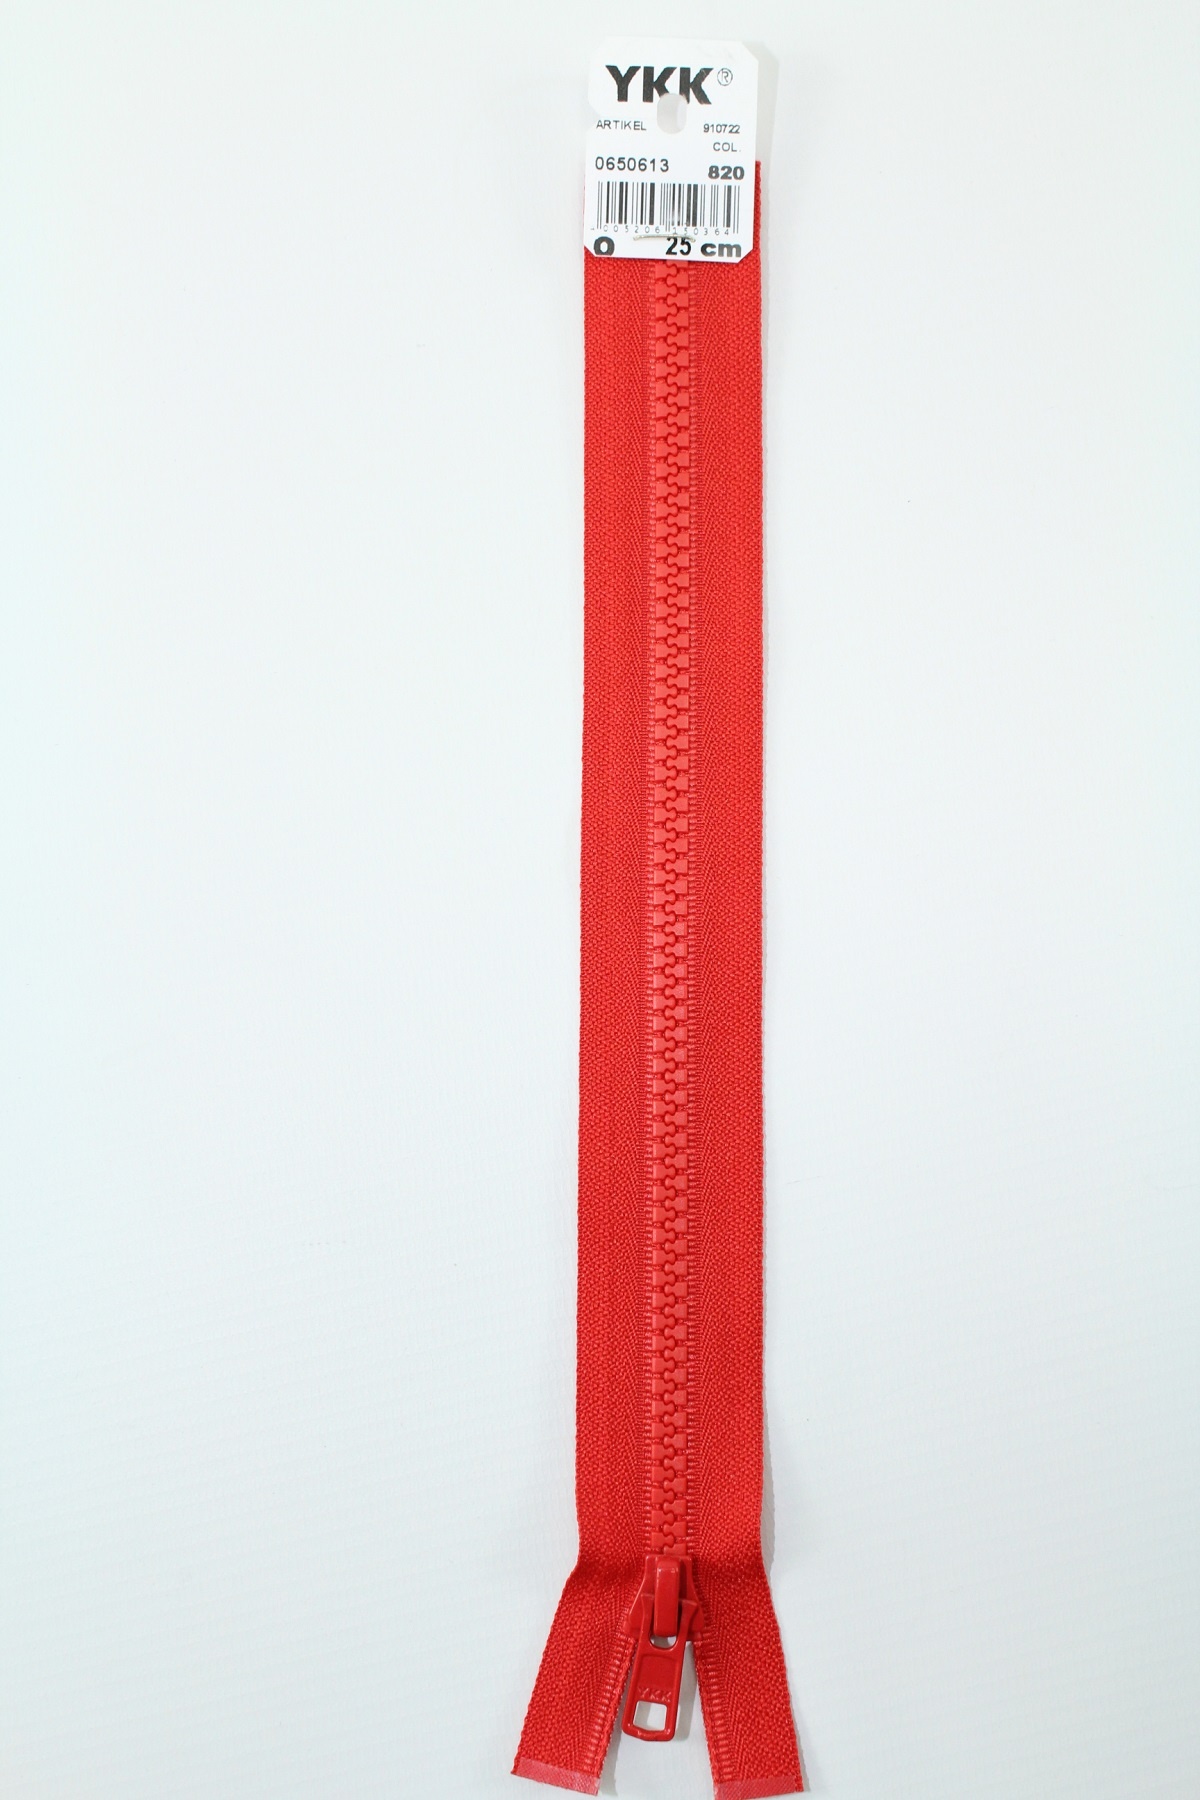 YKK - Reissverschlüsse 25 cm - 80 cm, teilbar, hochrot